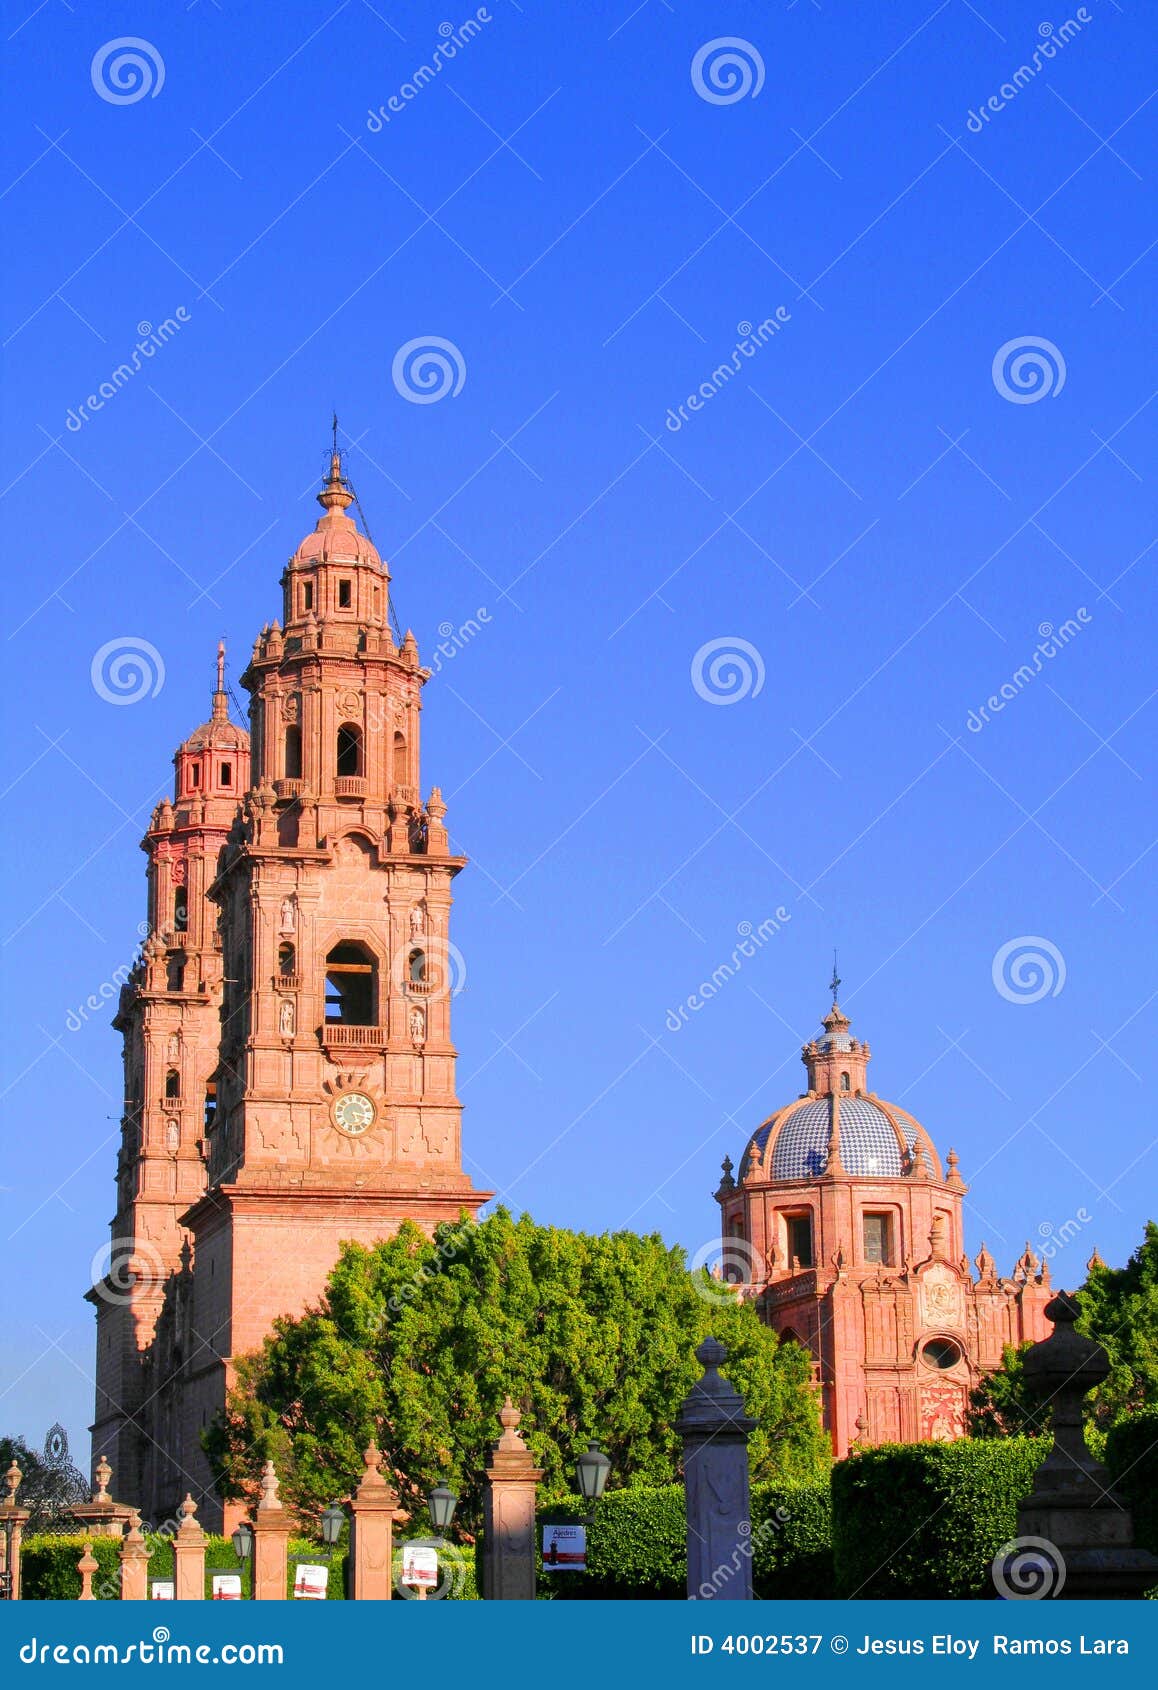 morelia cathedral in michoacan, mexico.